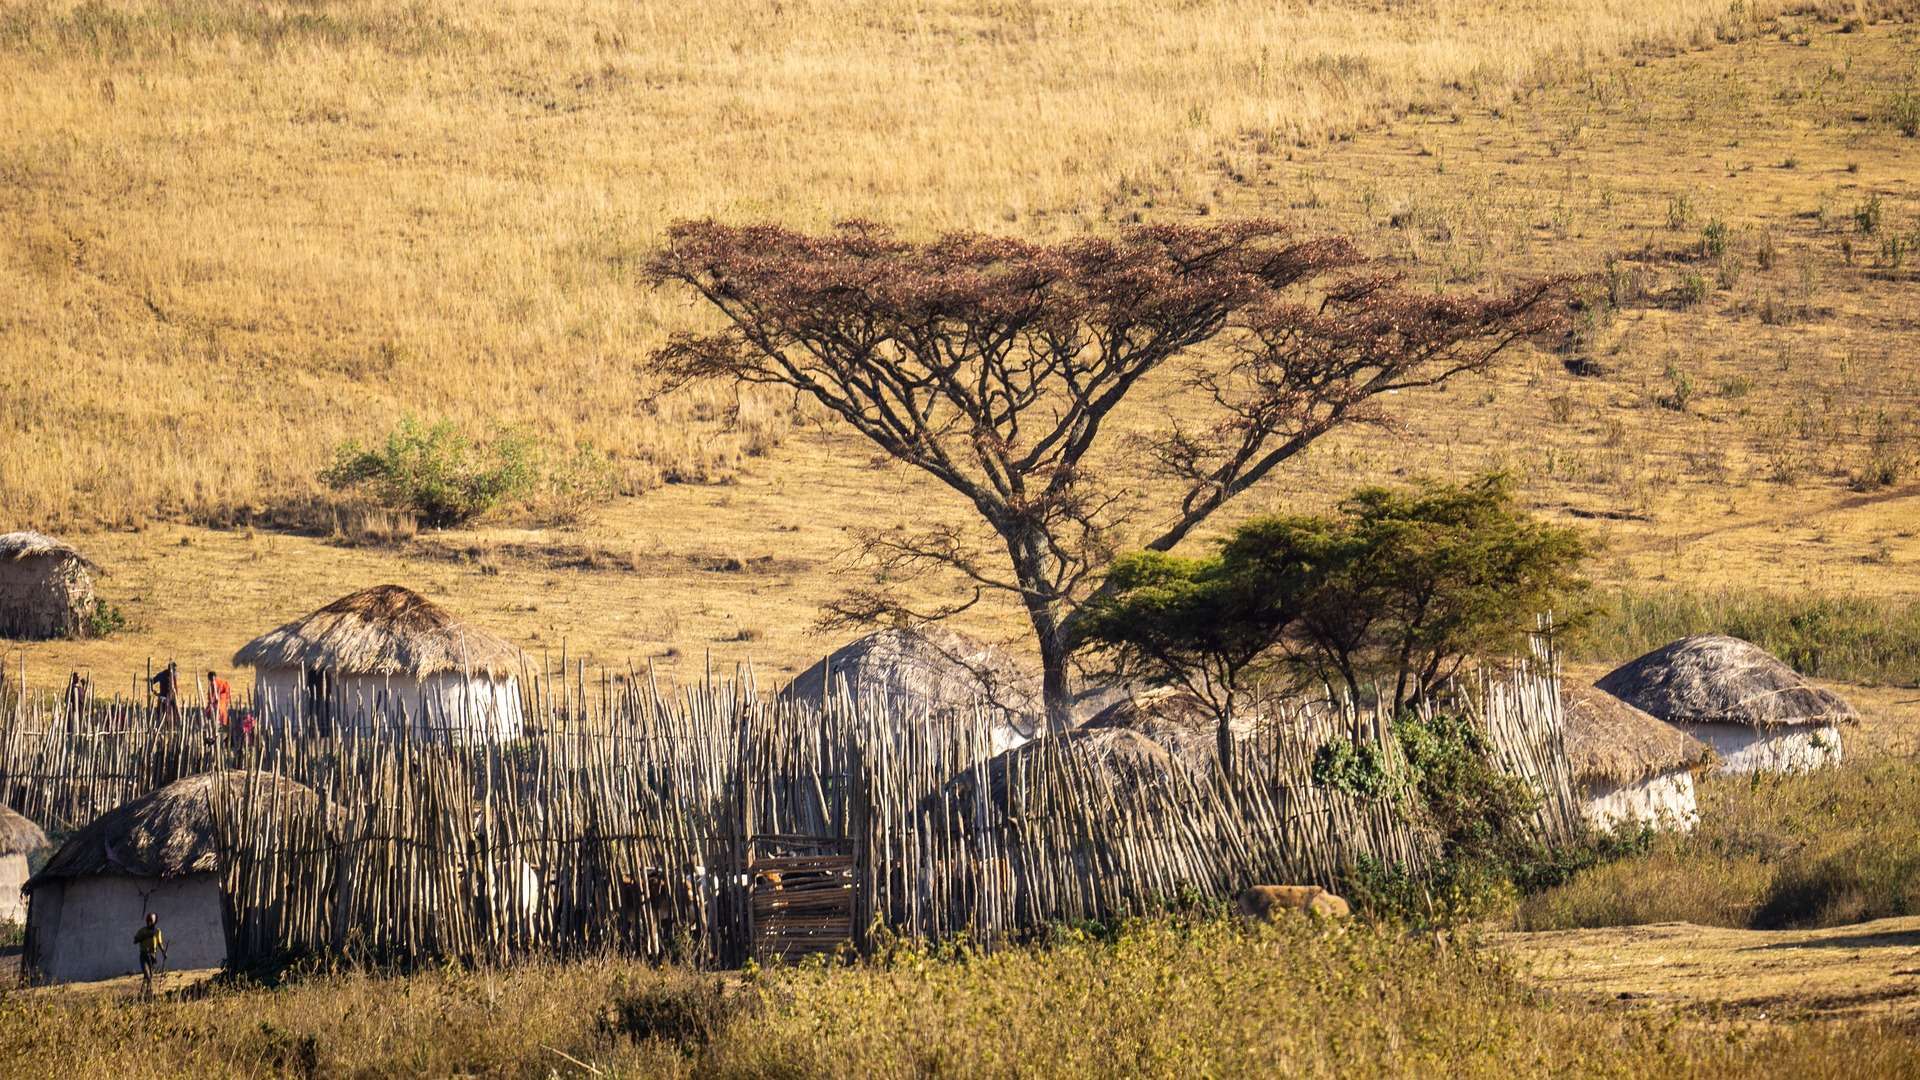 Masai shelter